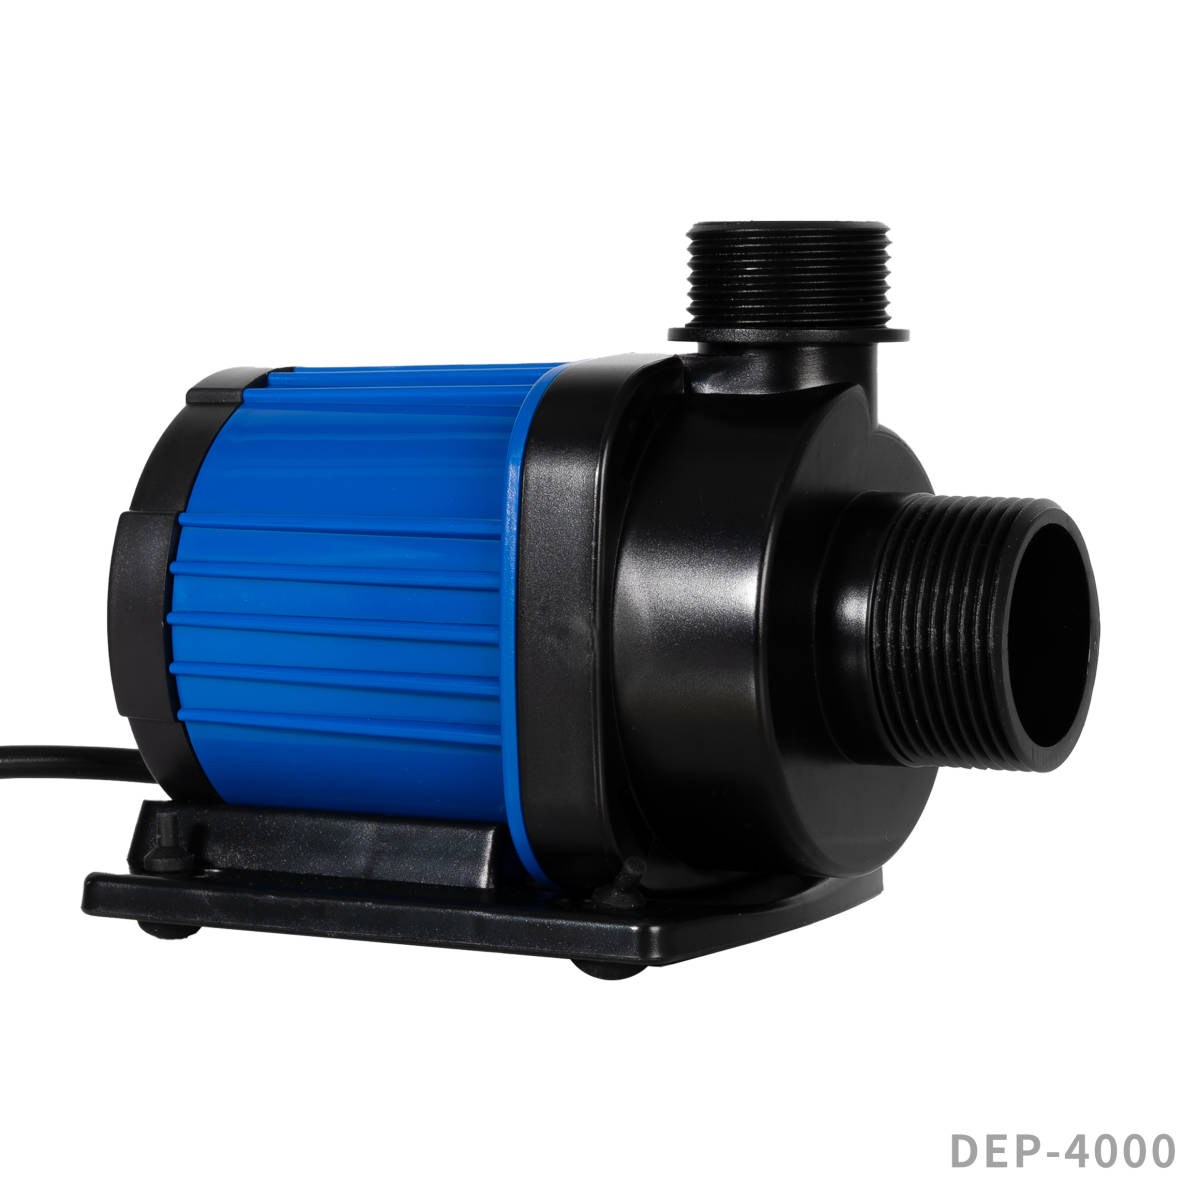 【Amazon返却品１ヶ月保証付き】Hsbao社製 DEP-4000 4000L/H (JEBAO DCP-4000競合品）DCポンプ 水中ポンプ